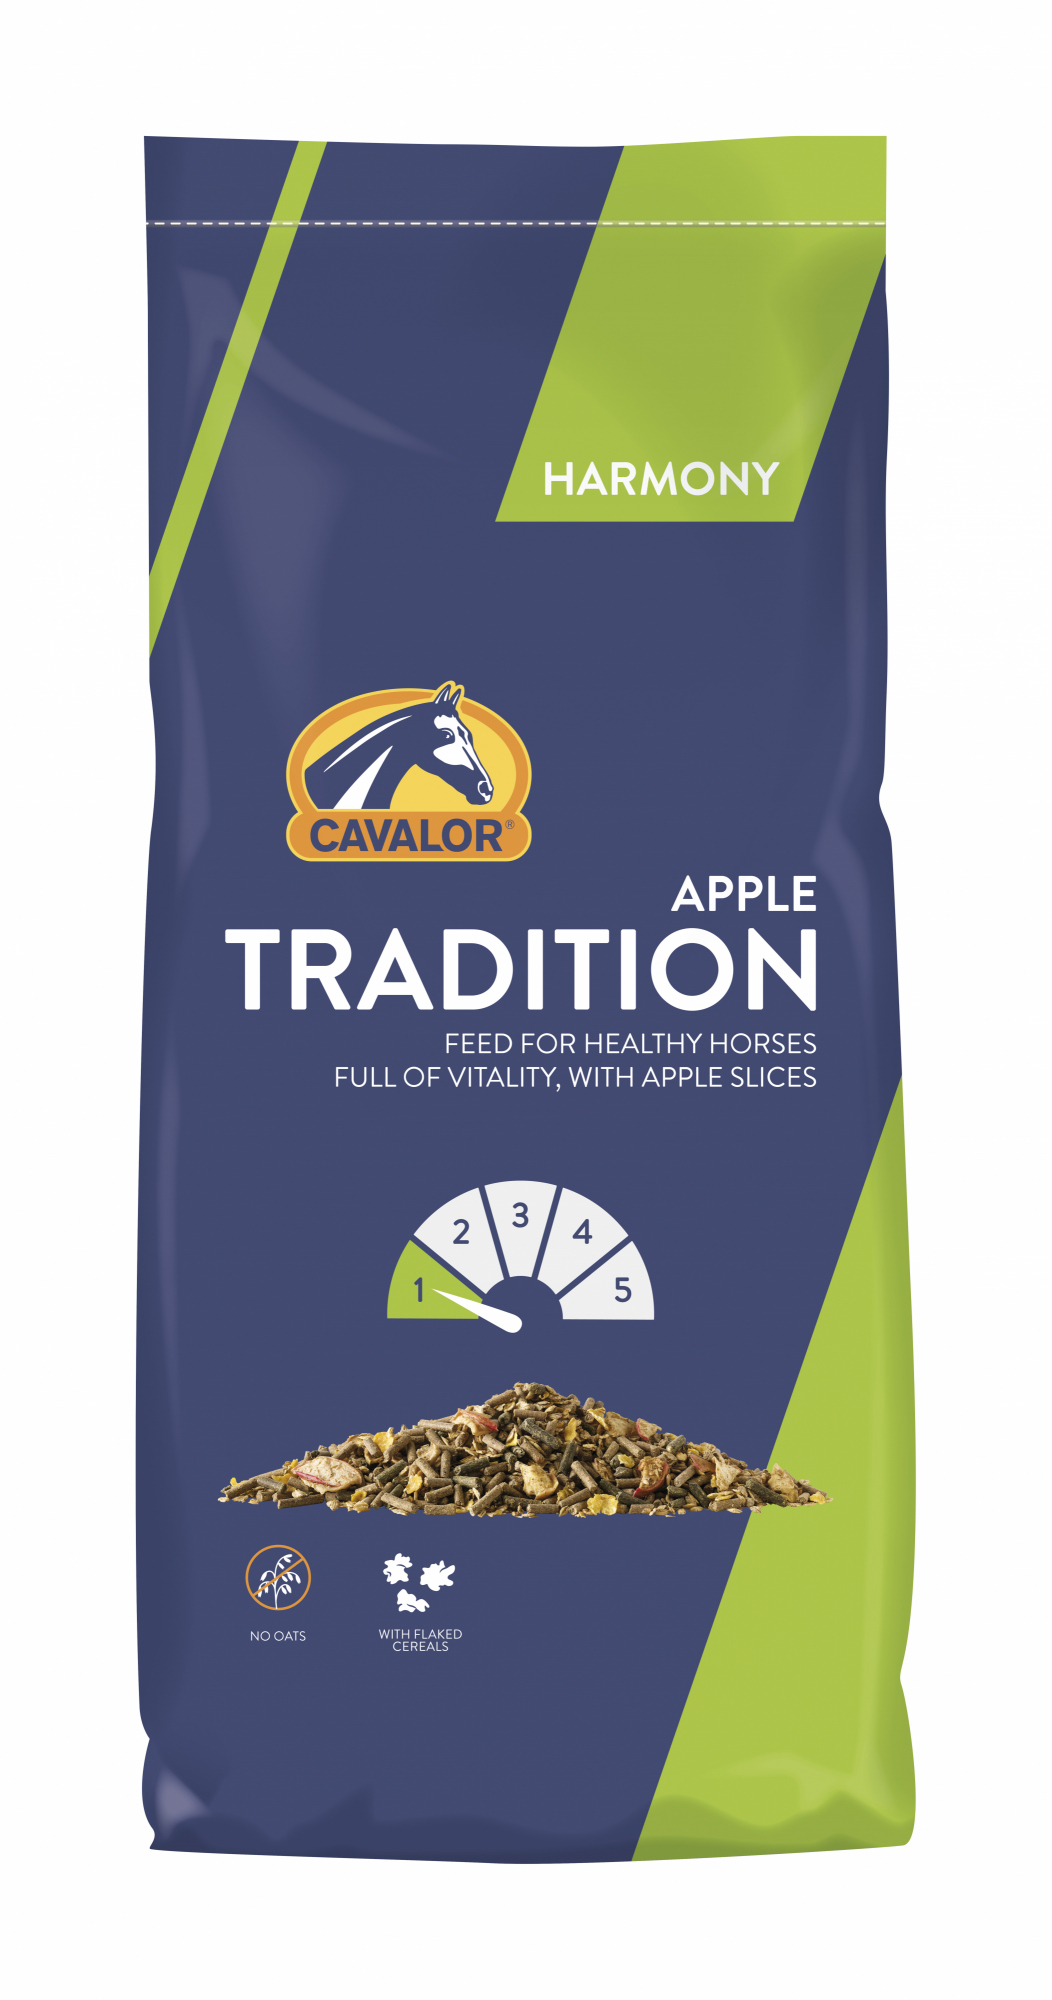 Cavalor HARMONY Tradition Apple - Alimento para cavalos de lazer